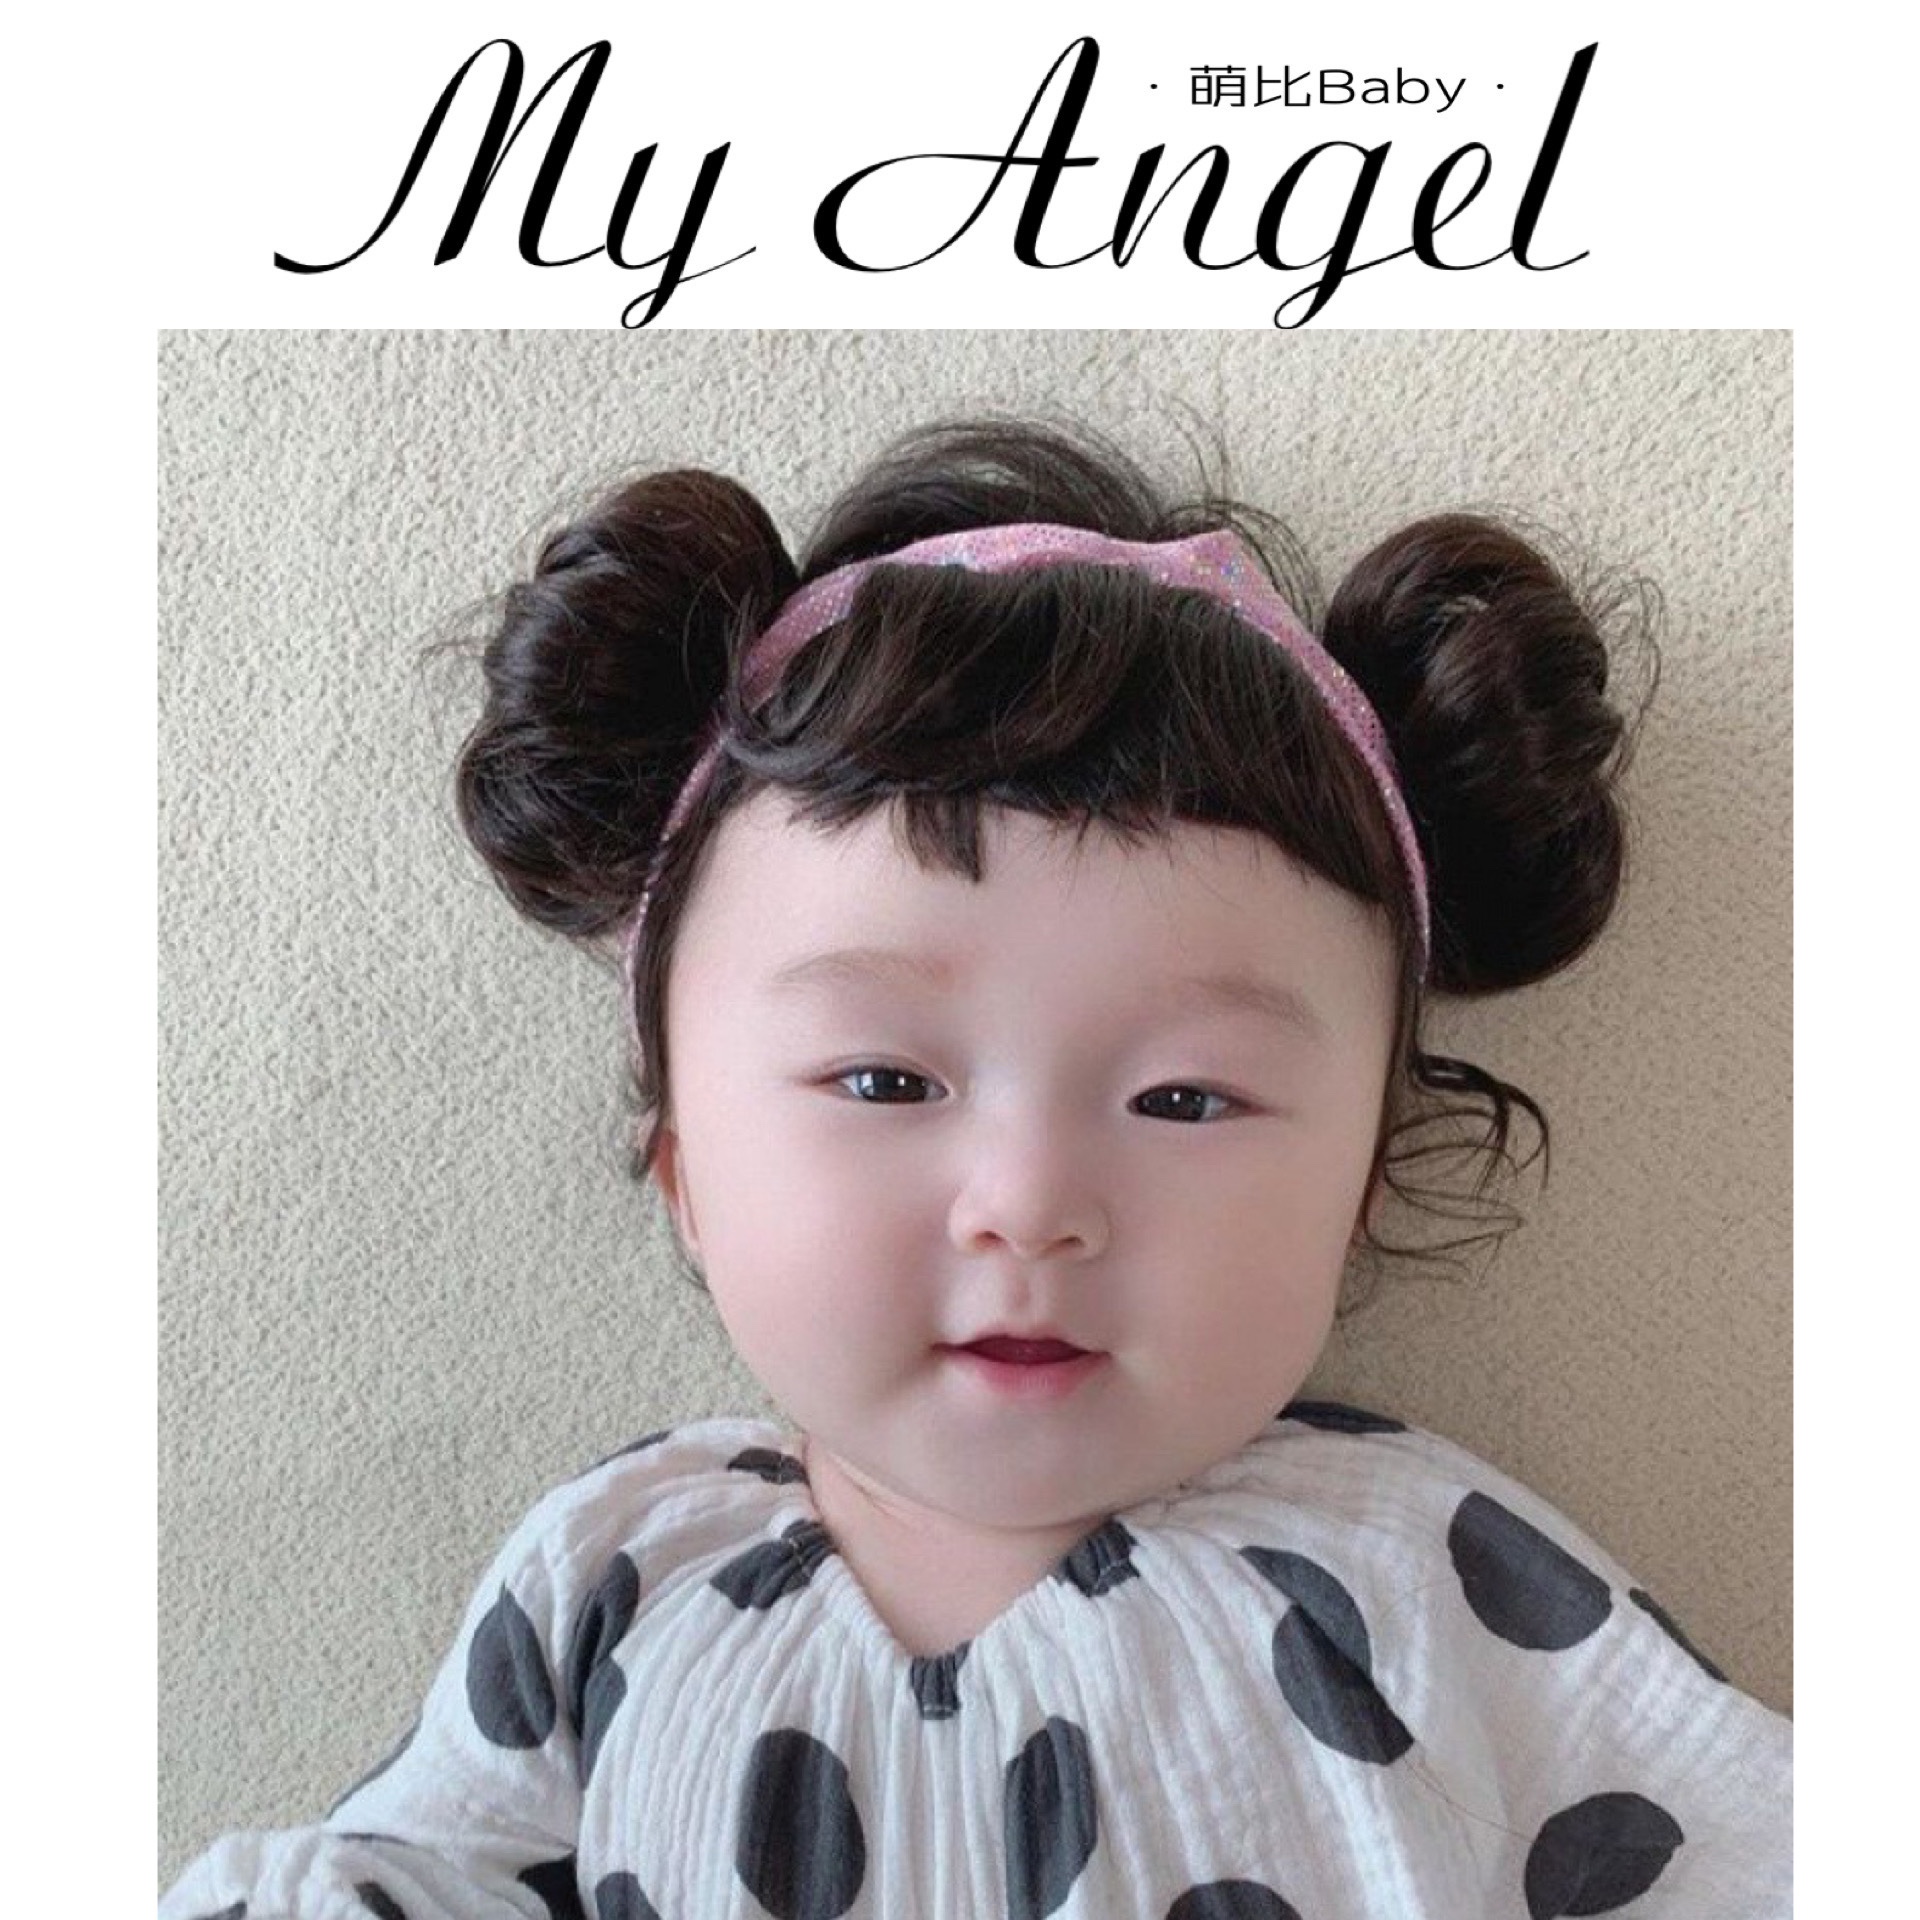 ins 爆款韩国婴儿可爱花苞丸子头假发发带女宝宝百搭头饰婴童发饰